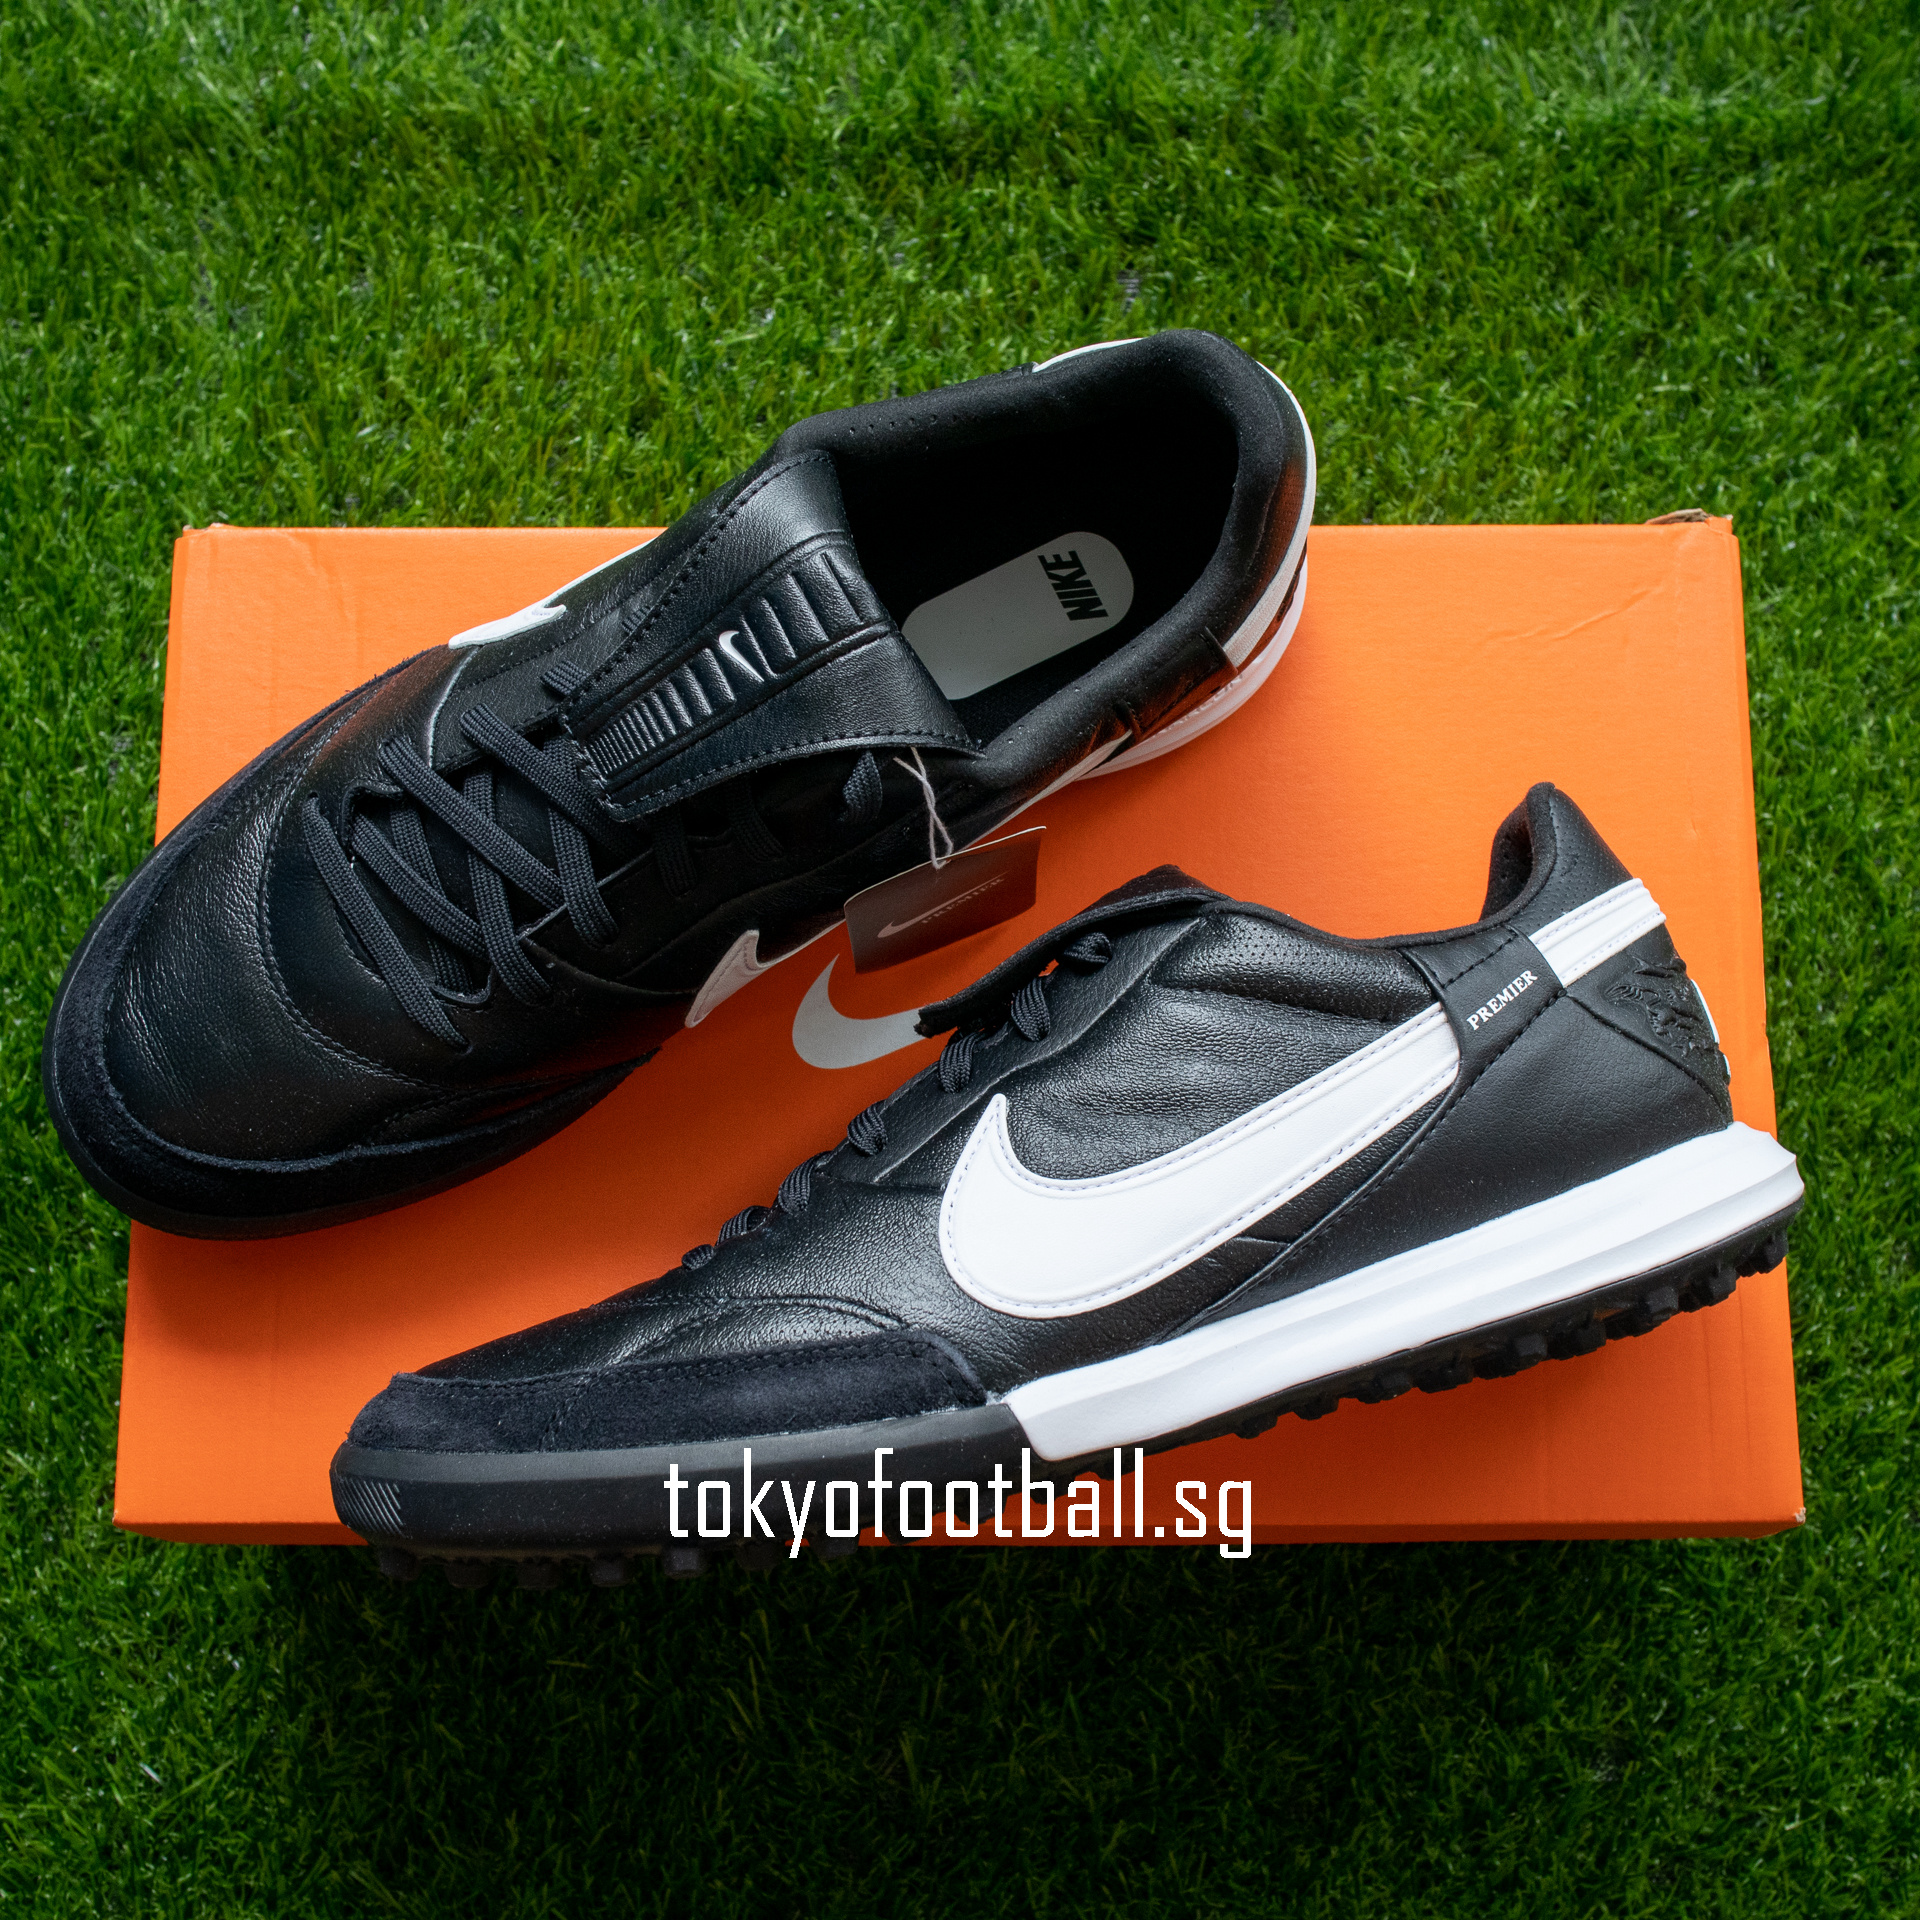 SG Local Seller] NIKE TIEMPO PREMIER 3 TF soccer futsal turf football boots | Lazada Singapore